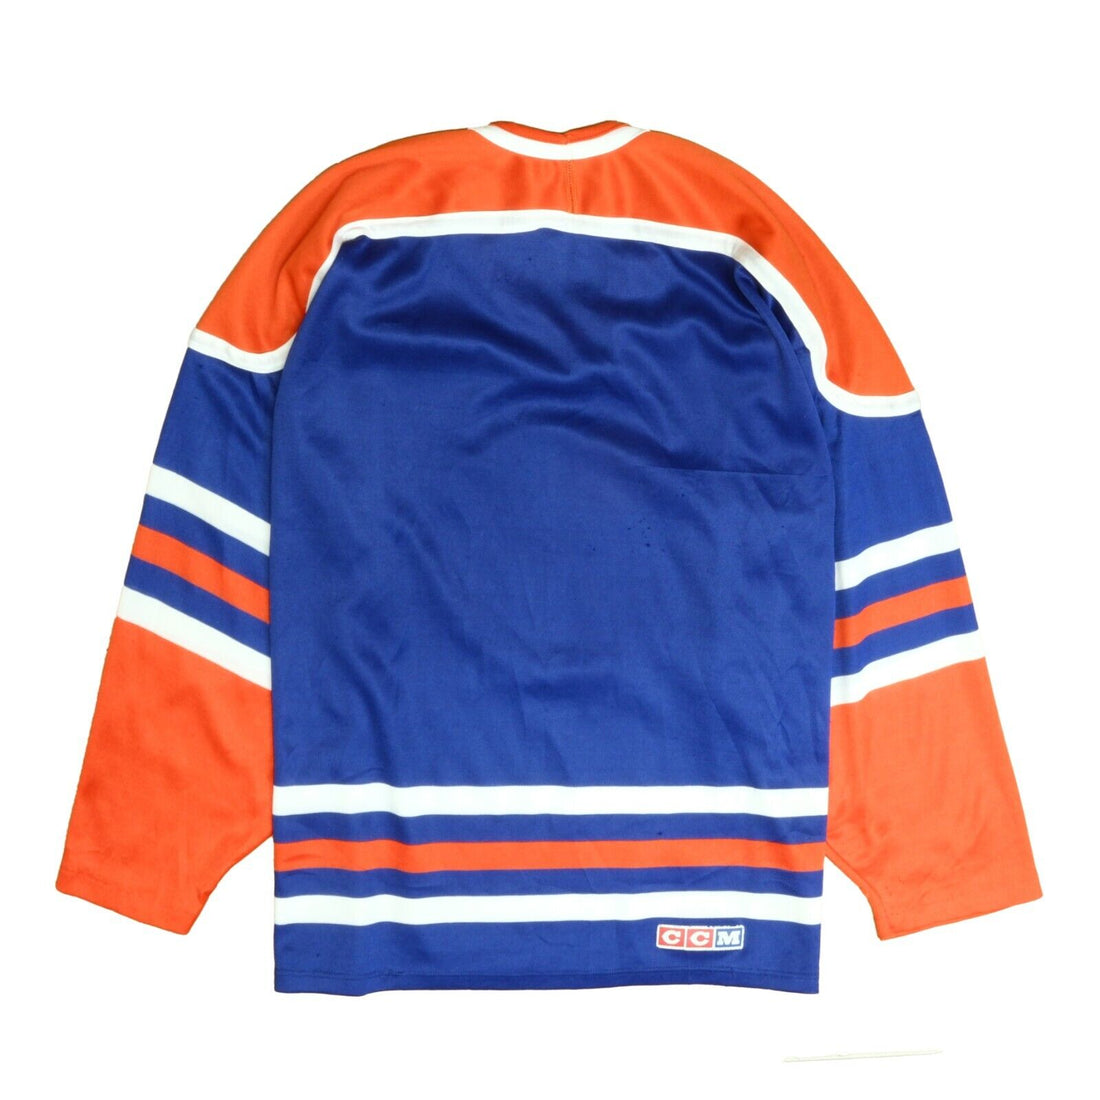 Vintage Edmonton Oilers CCM Maska Jersey Size XL Blue 90s NHL